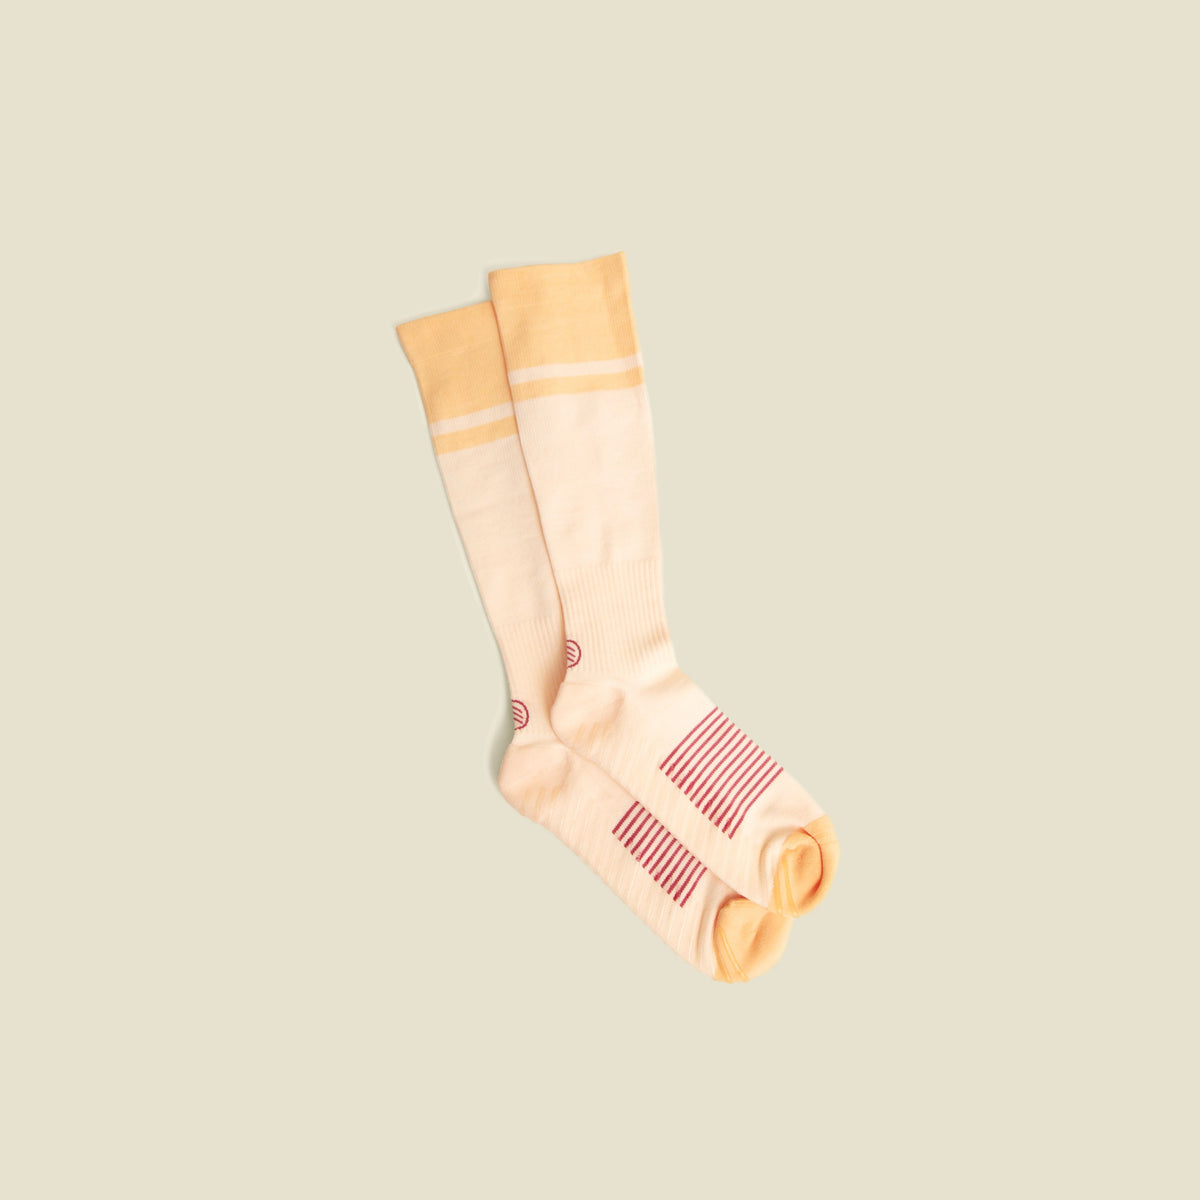 Women&#39;s Orange/Pink Compression Socks with Grips - 1 Pair - Gripjoy Socks